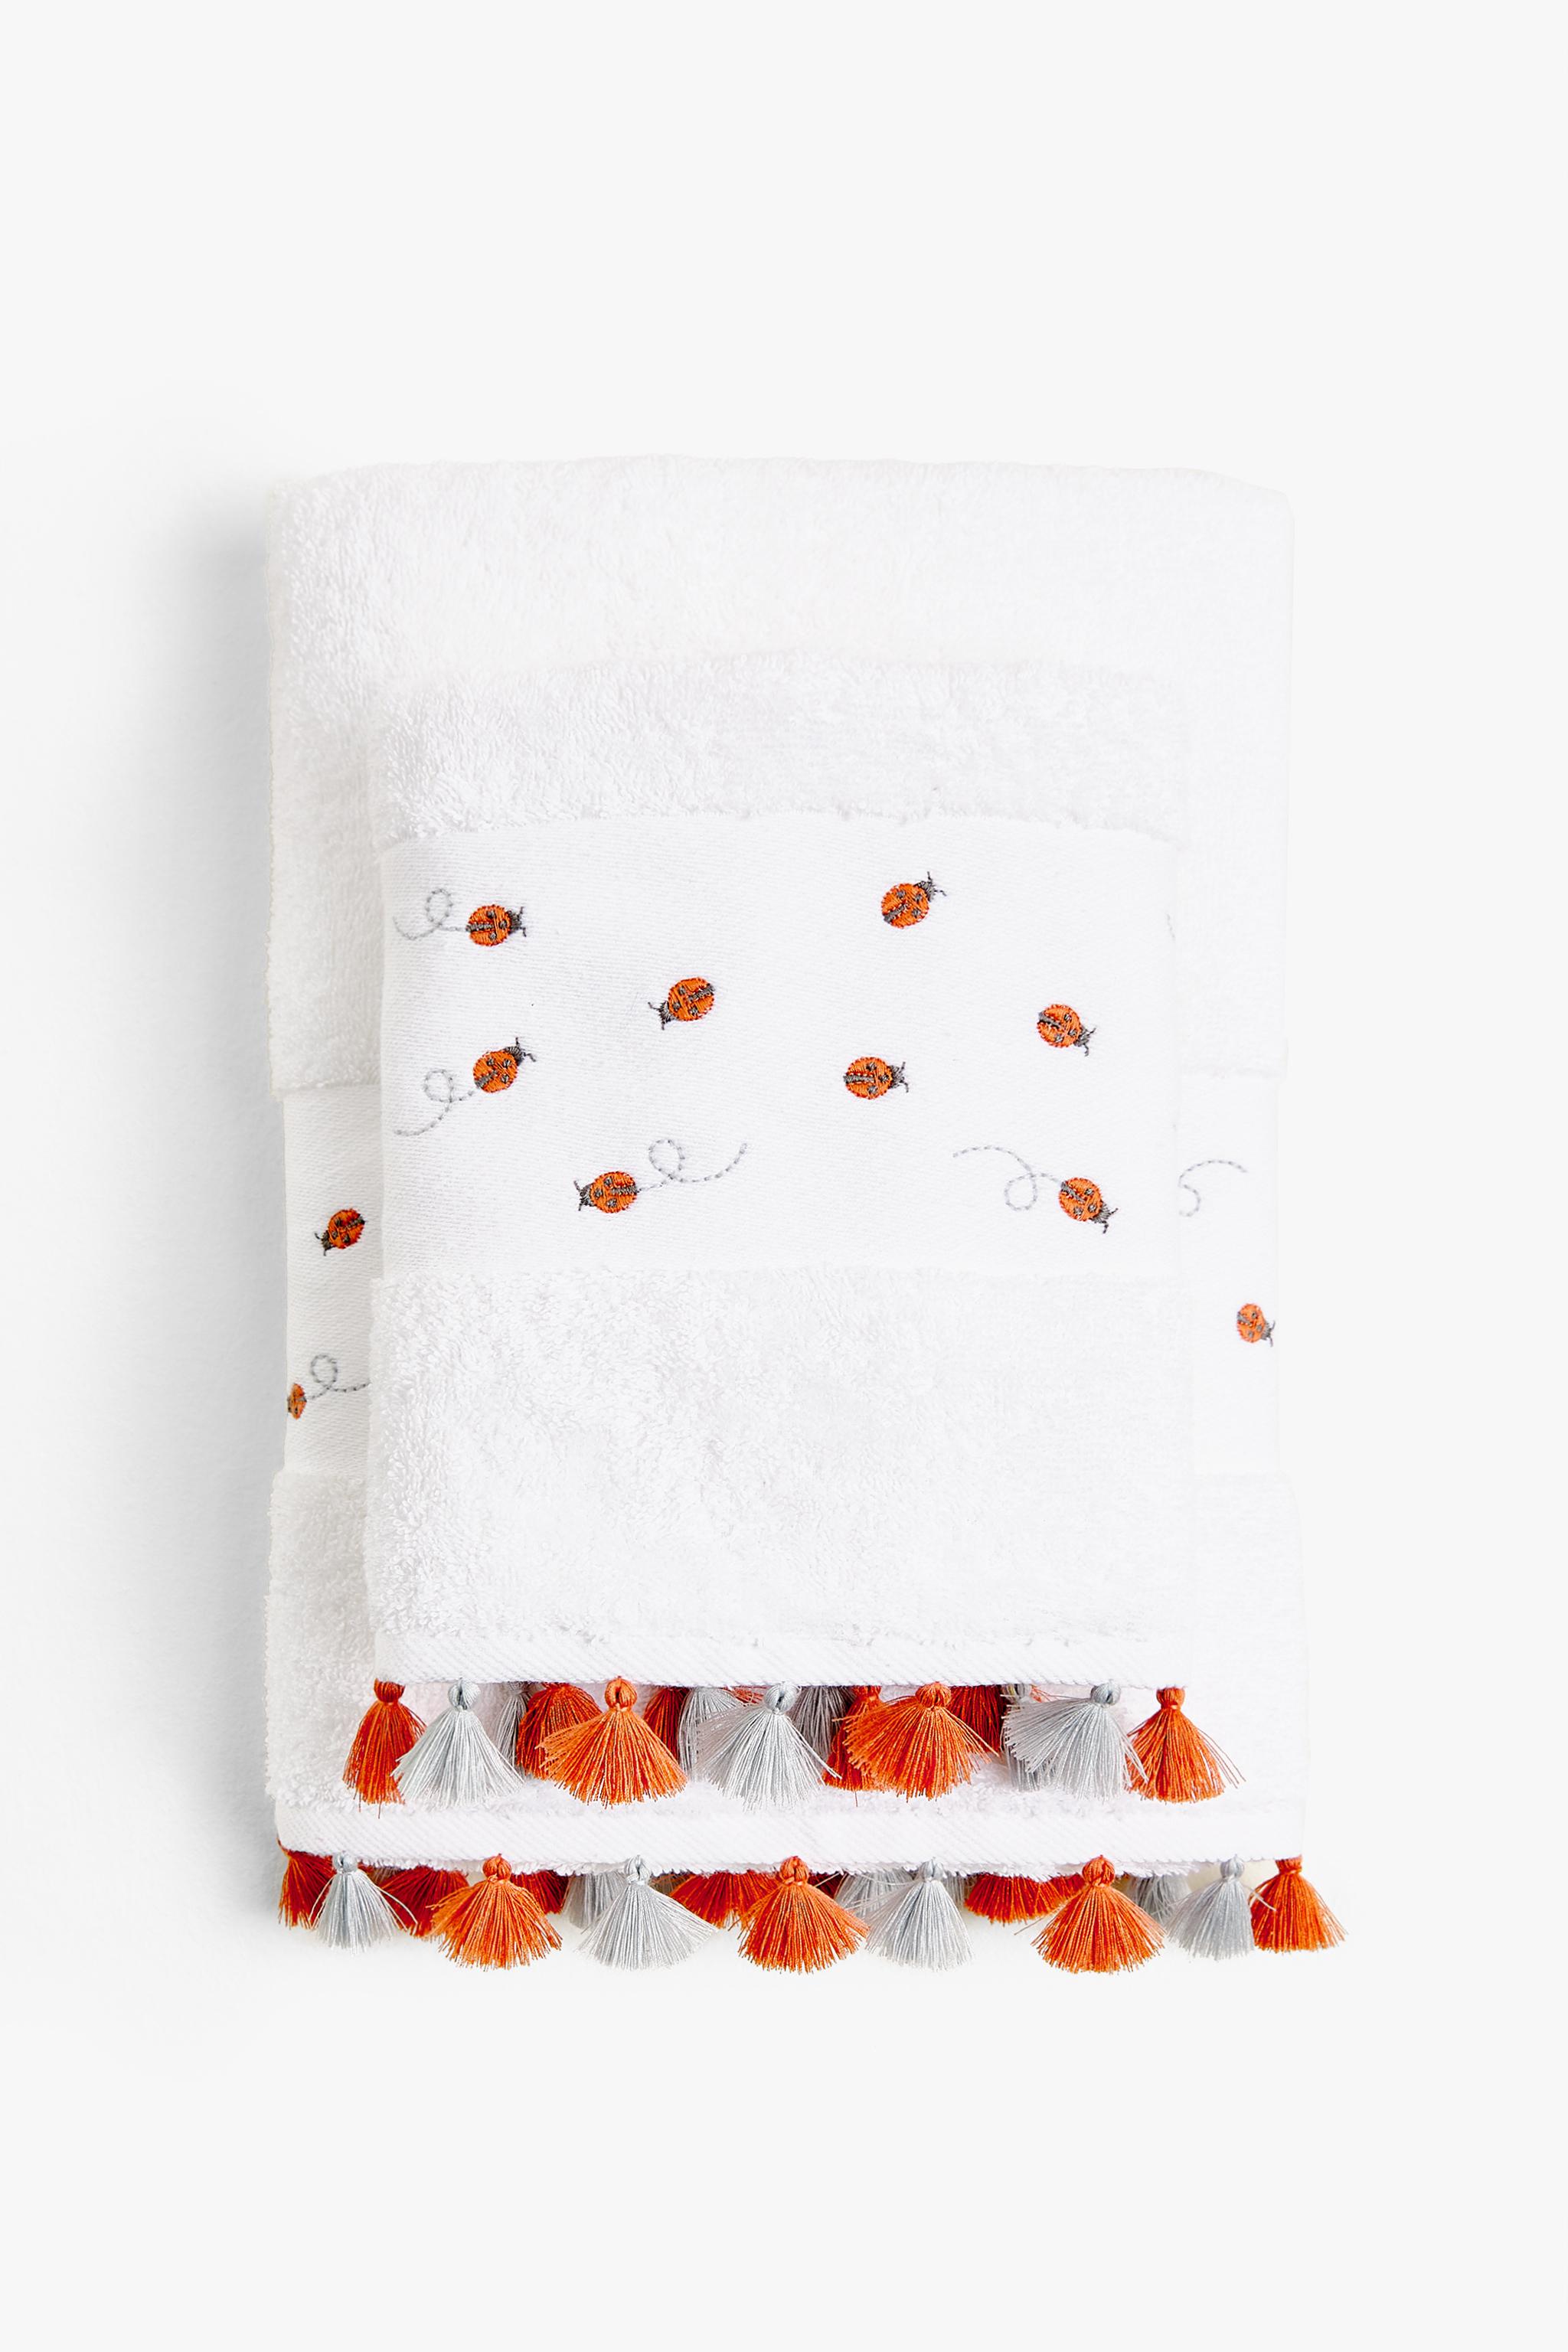 Casa Copenhagen 550 g/m² 2 grandi asciugamani cucina e doccia – viola e verde blu 2 asciugamani da bagno in cotone egiziano super morbido set da 6 asciugamani per bagno 2 teli grandi da bagno 